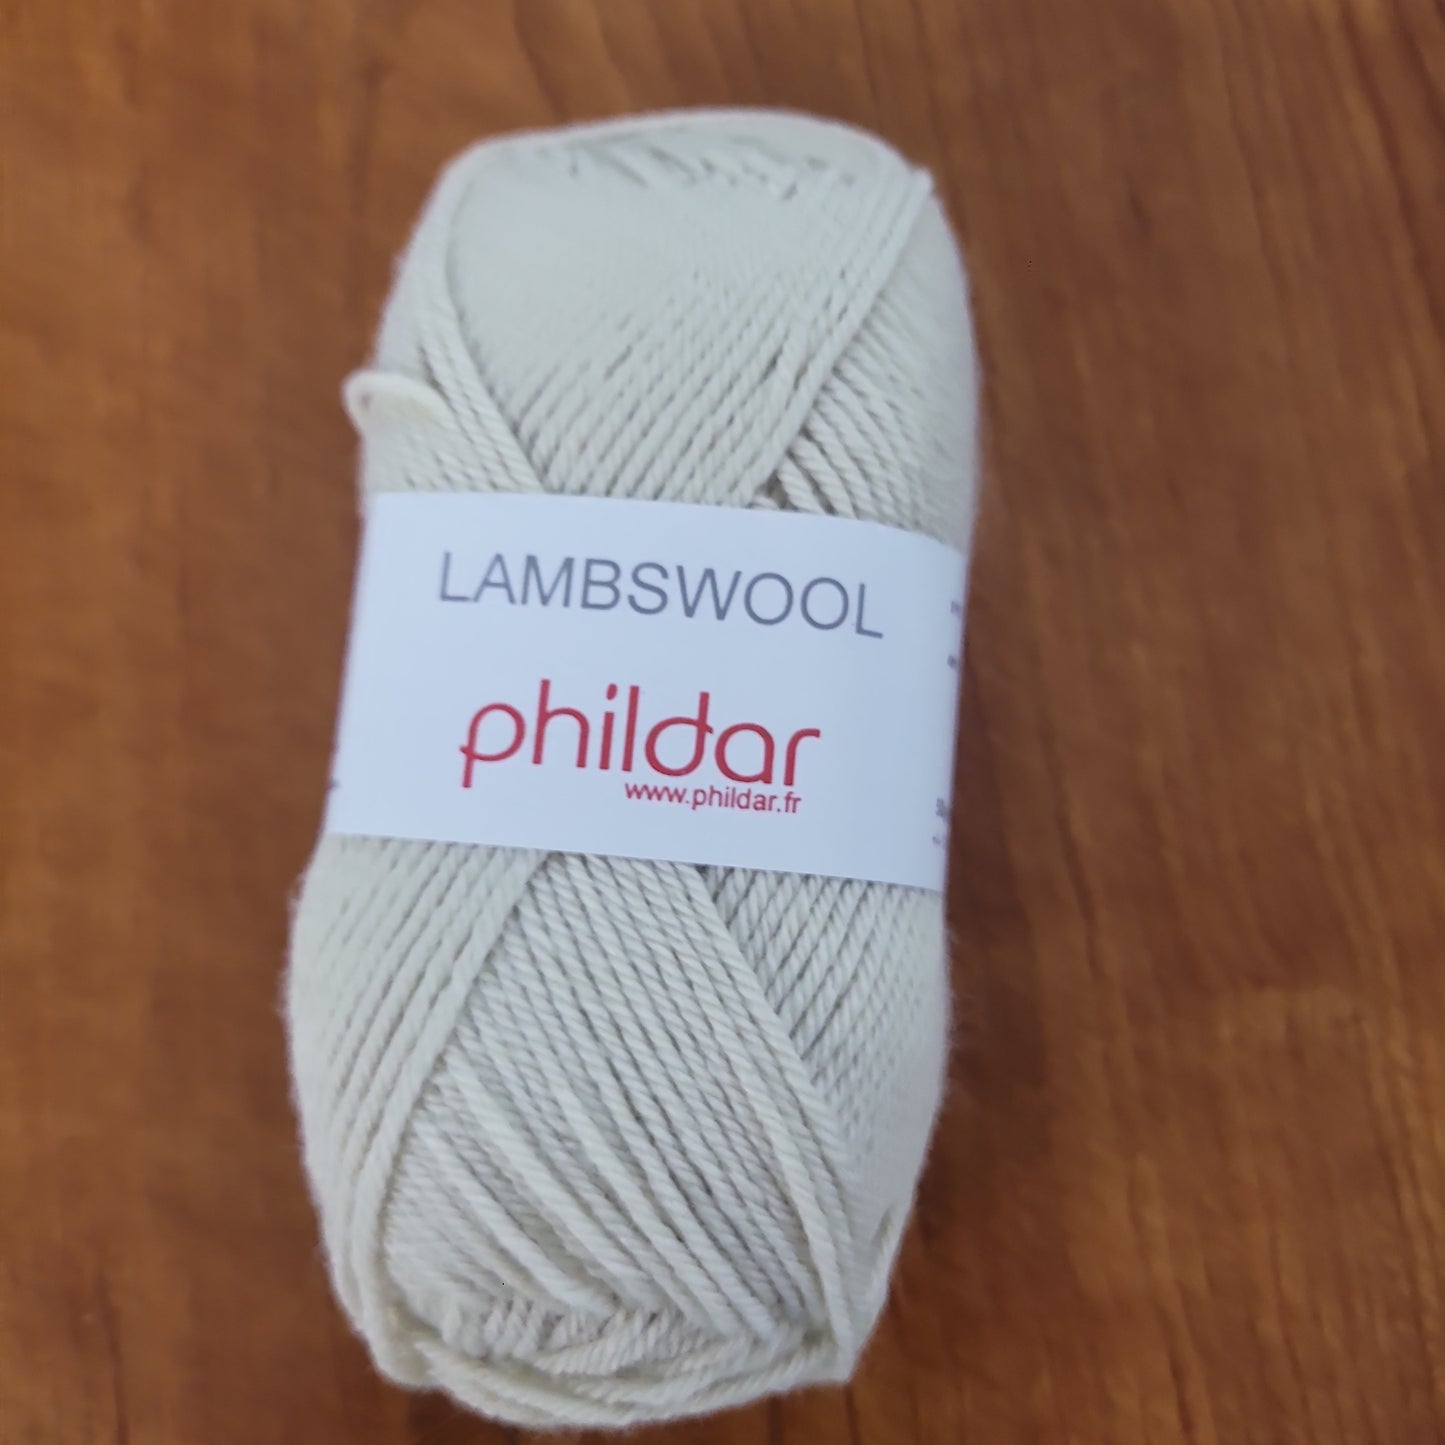 Lambswool Phildar